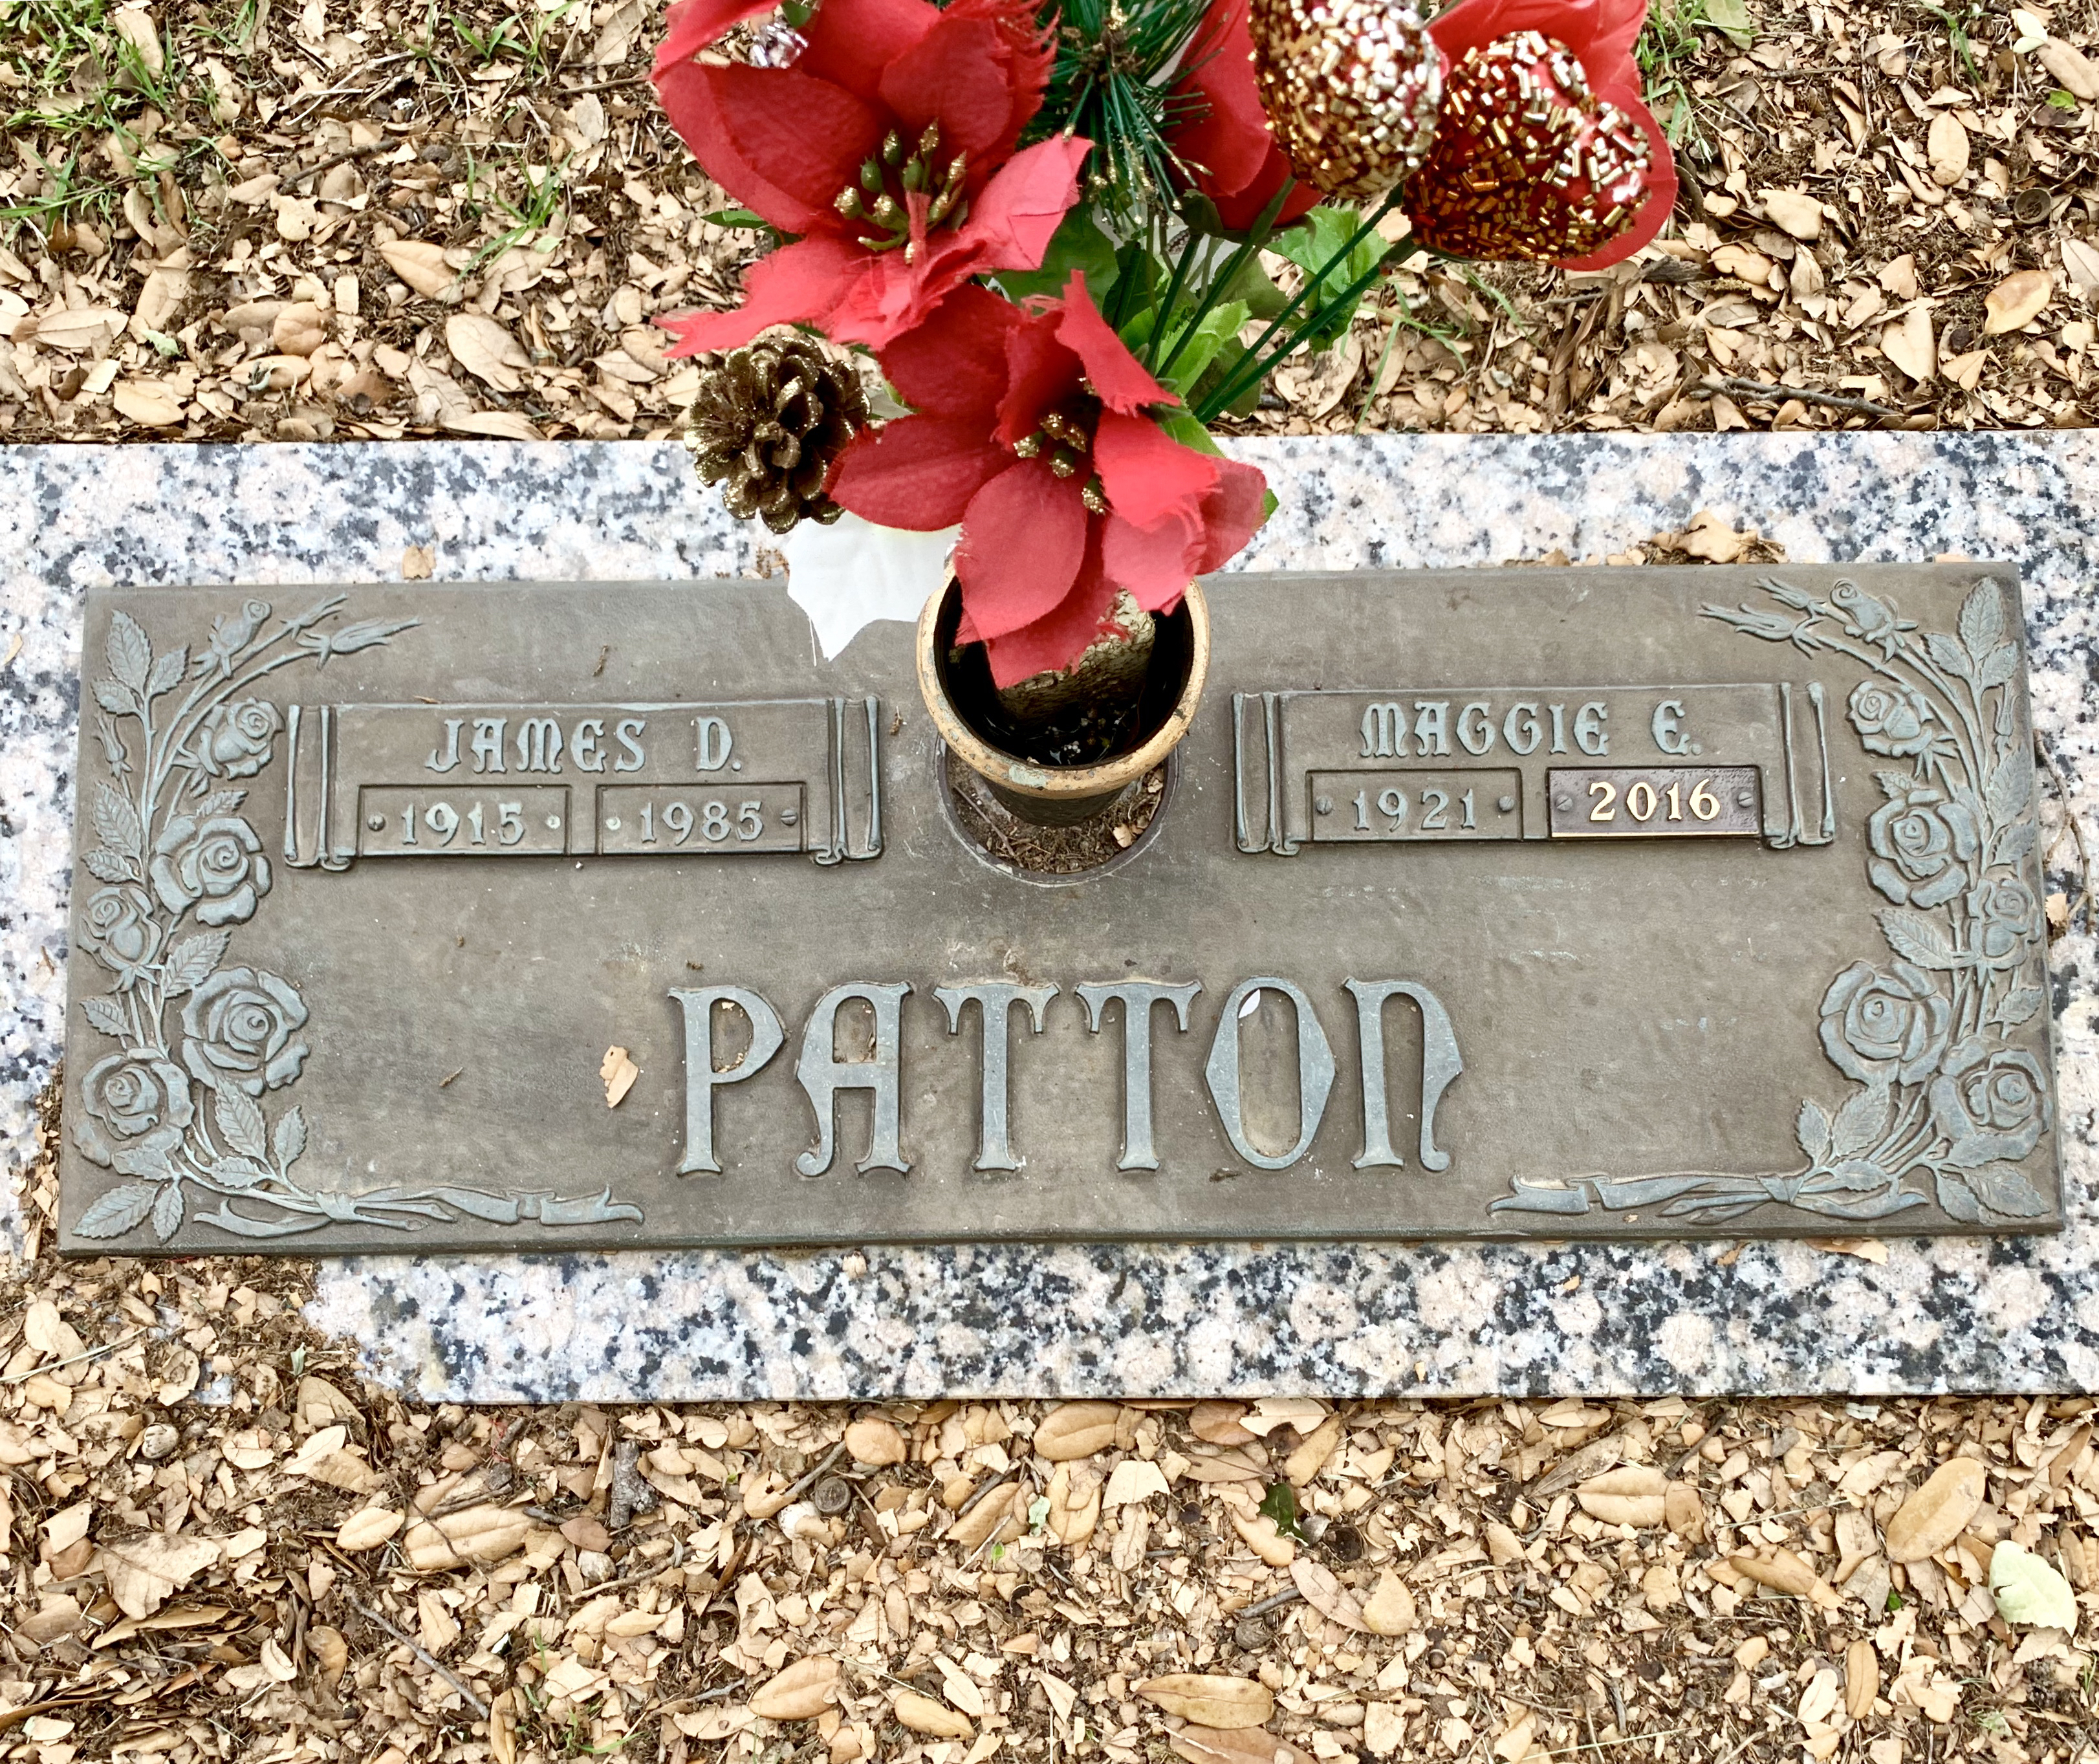 James D Patton + Maggie E Patton Grave